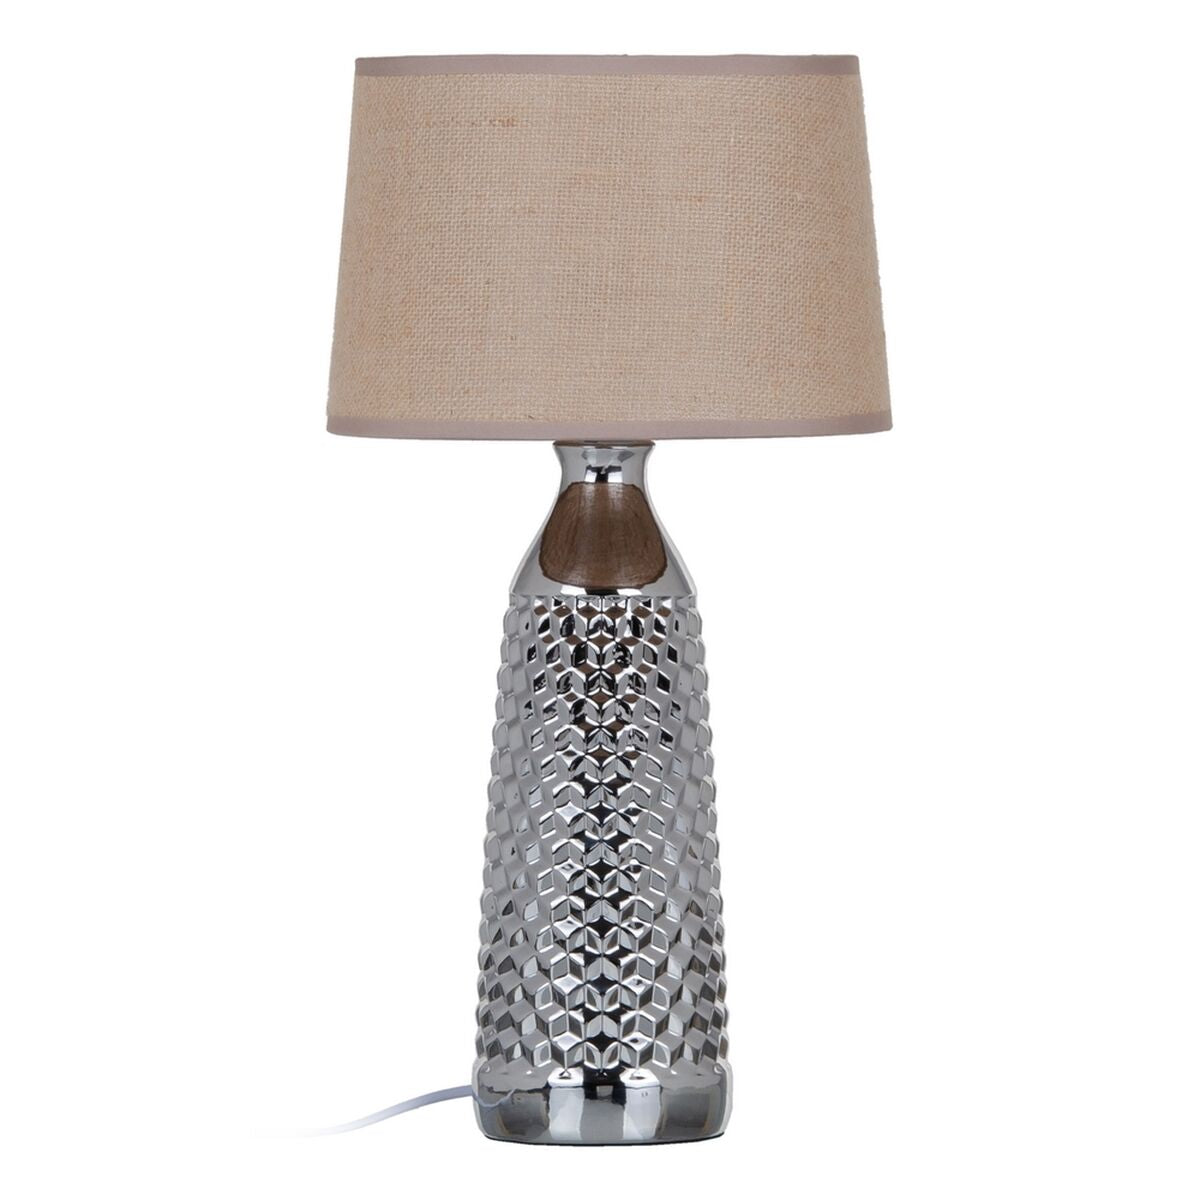 Table lamp beige silver ceramic